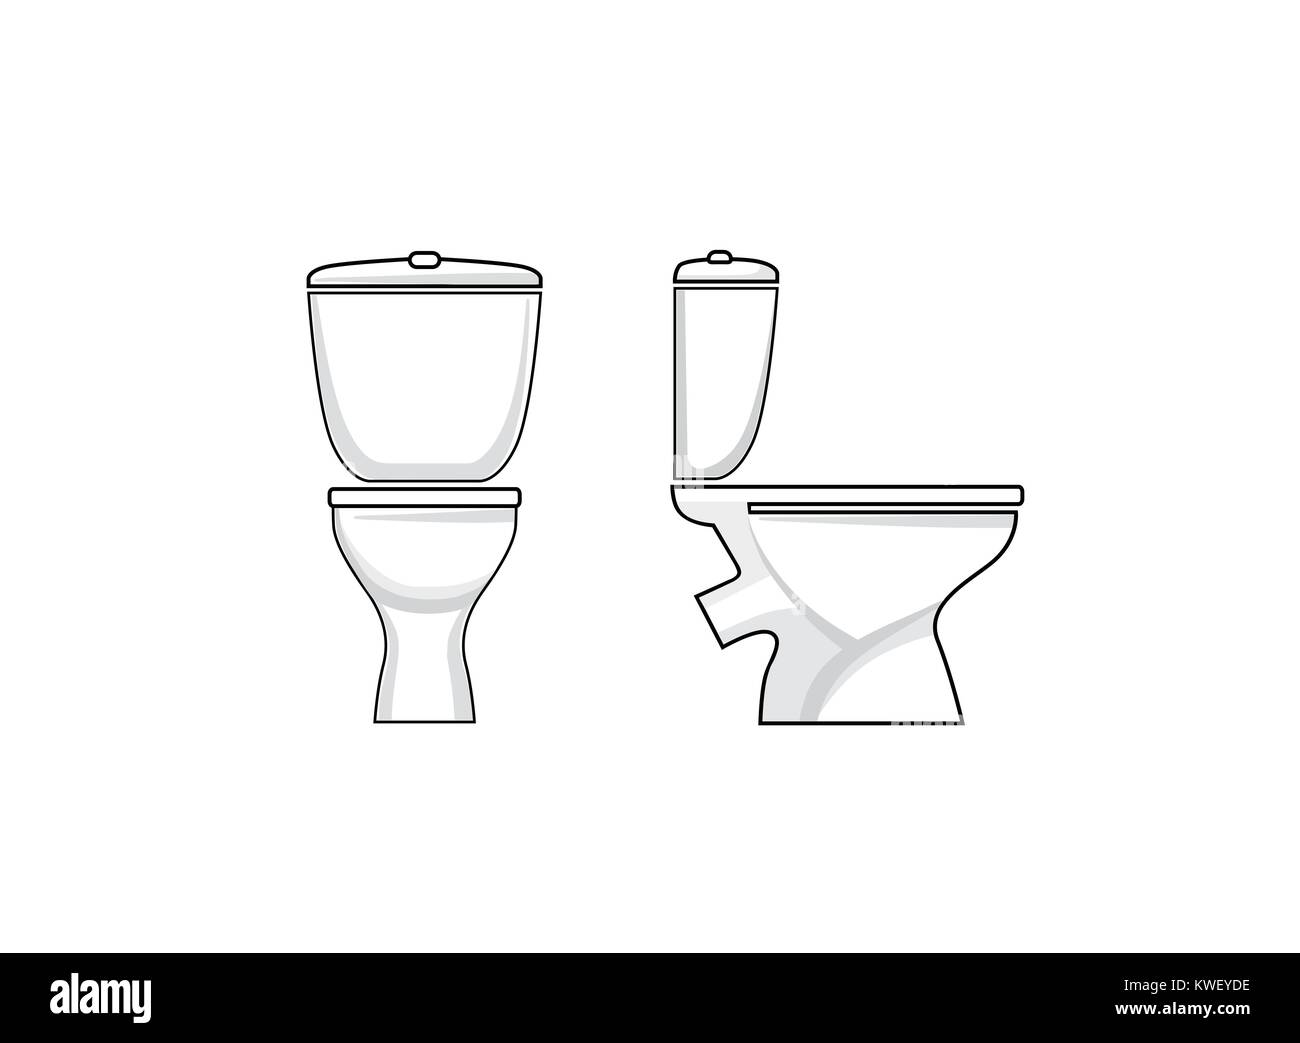 Toilet Sign. Toilet seat. Line art Icon Set. Stock Vector